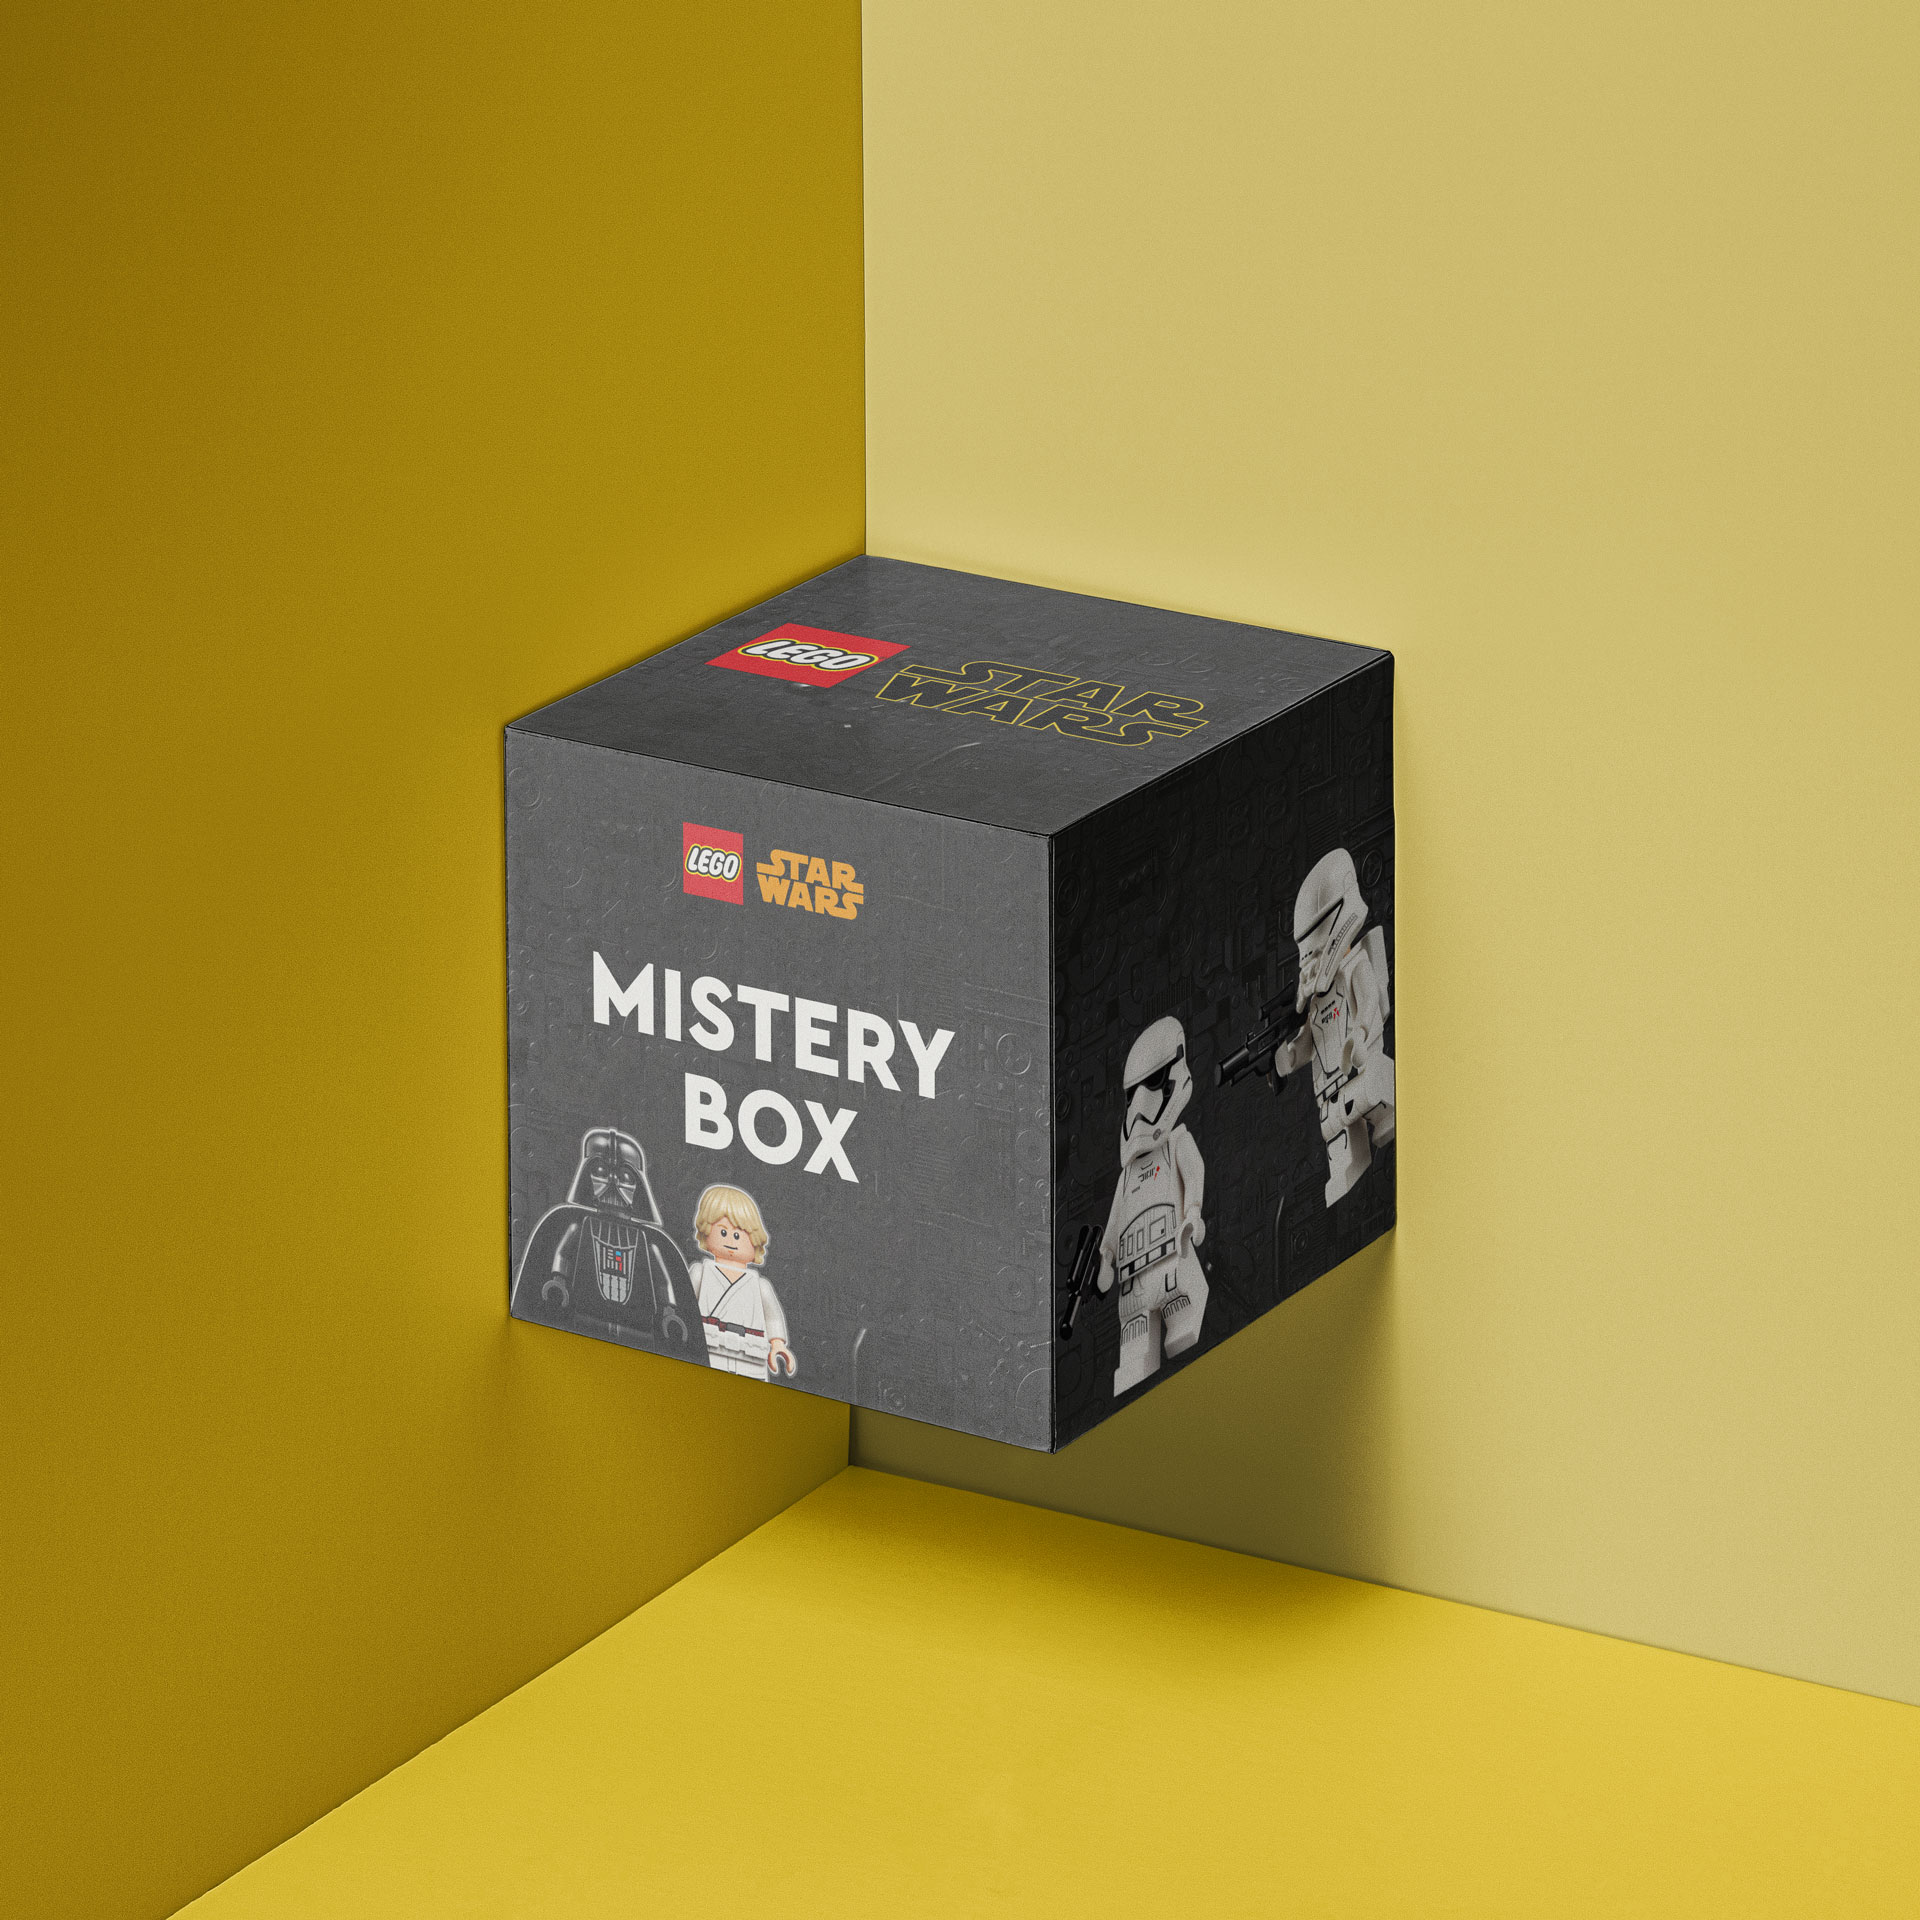 Mystery Box LEGO® Star Wars MISTERYSW, , large